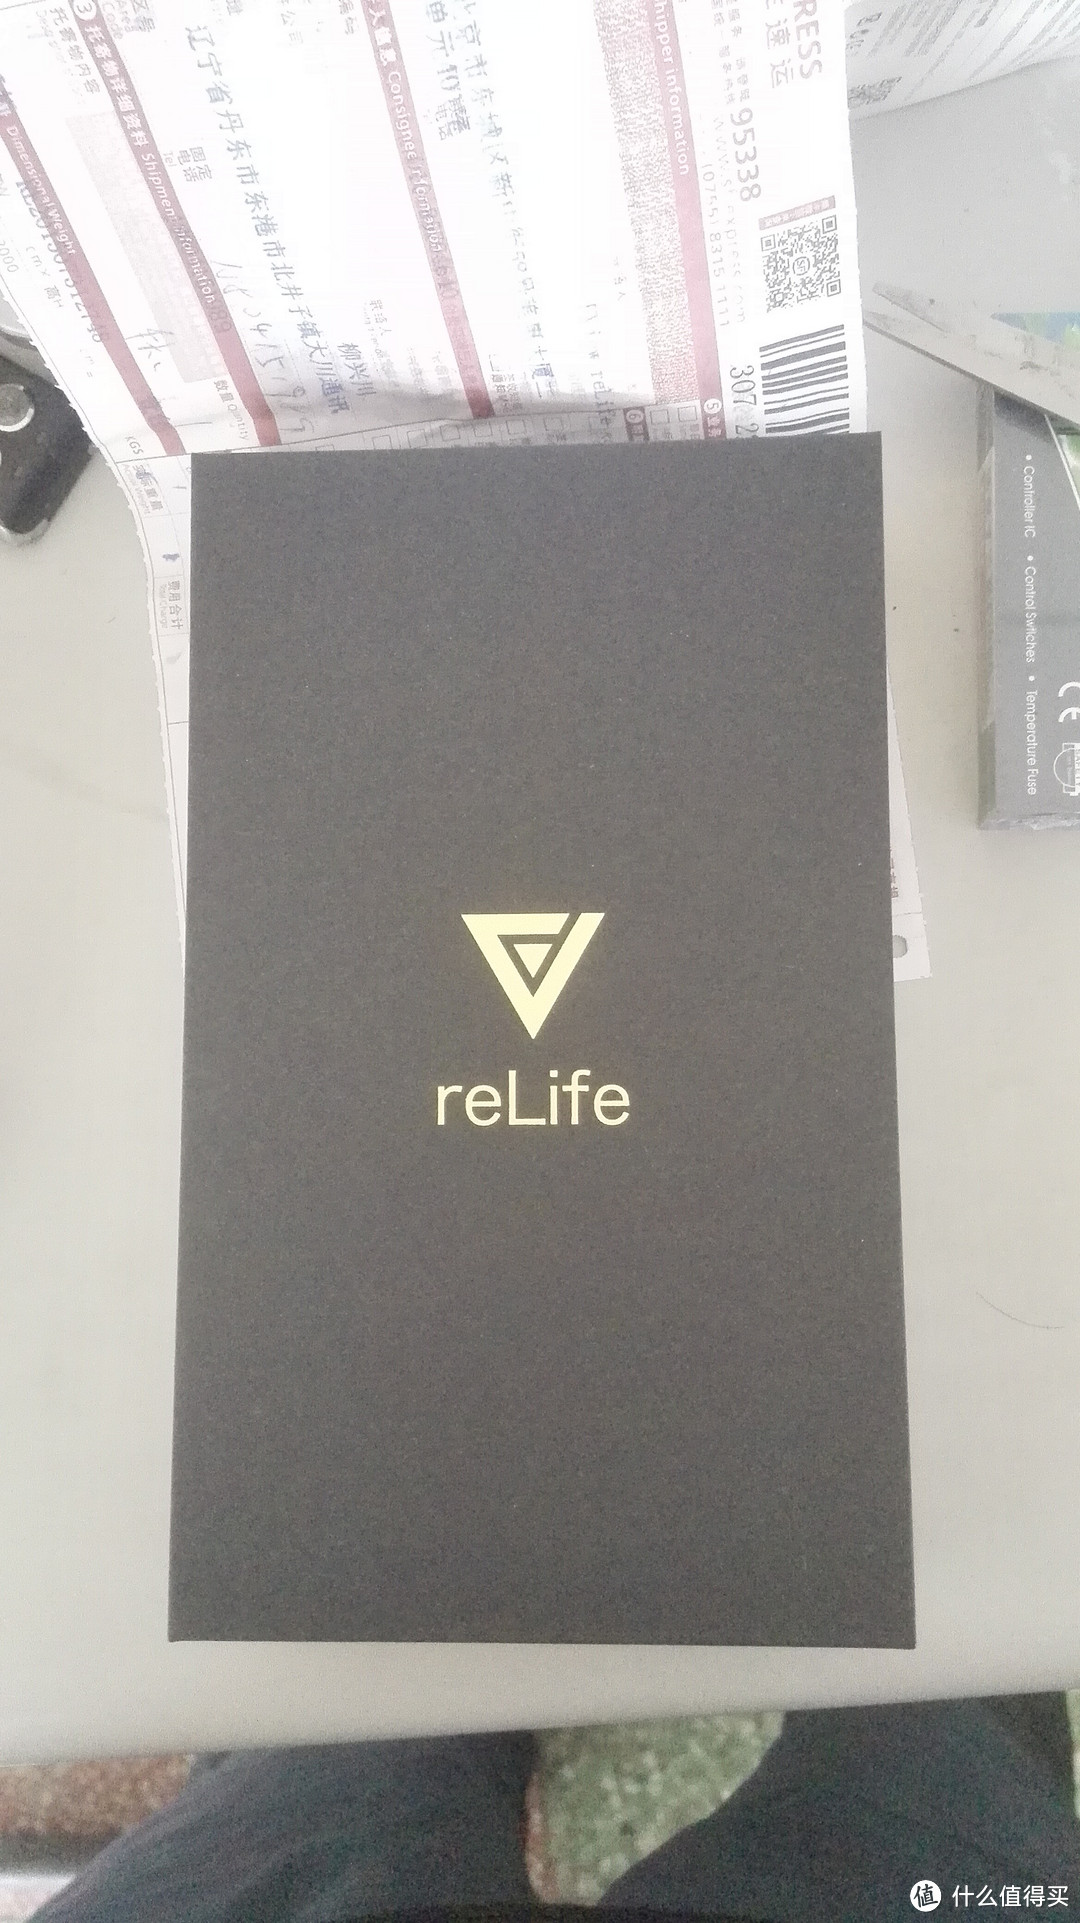 FView reLife 闲置网站购买 C级 iPhone 6 Plus 经历